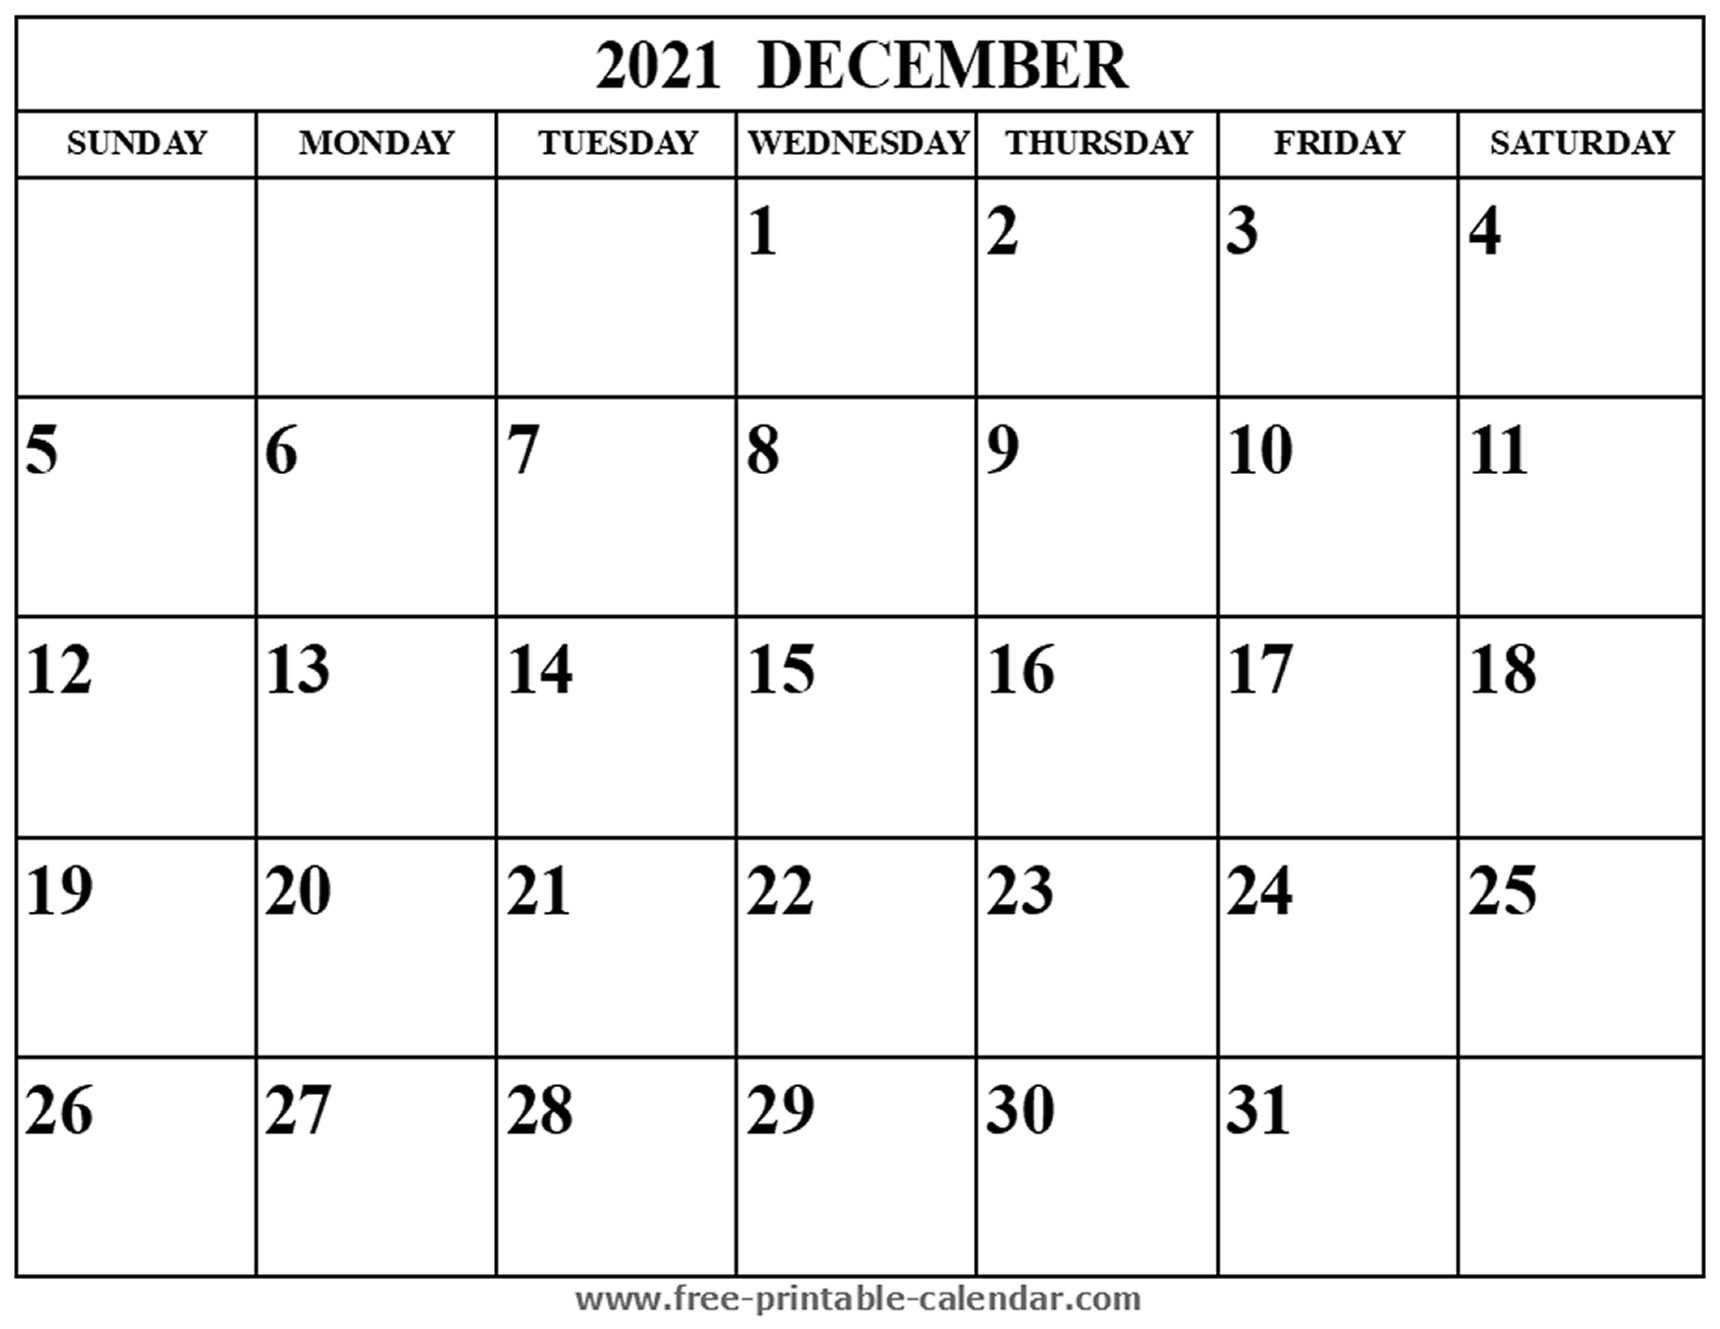 Monthly Fill In Calendar 2021 | Calendar Printables Free Blank-Fill In Calaendar For 2021